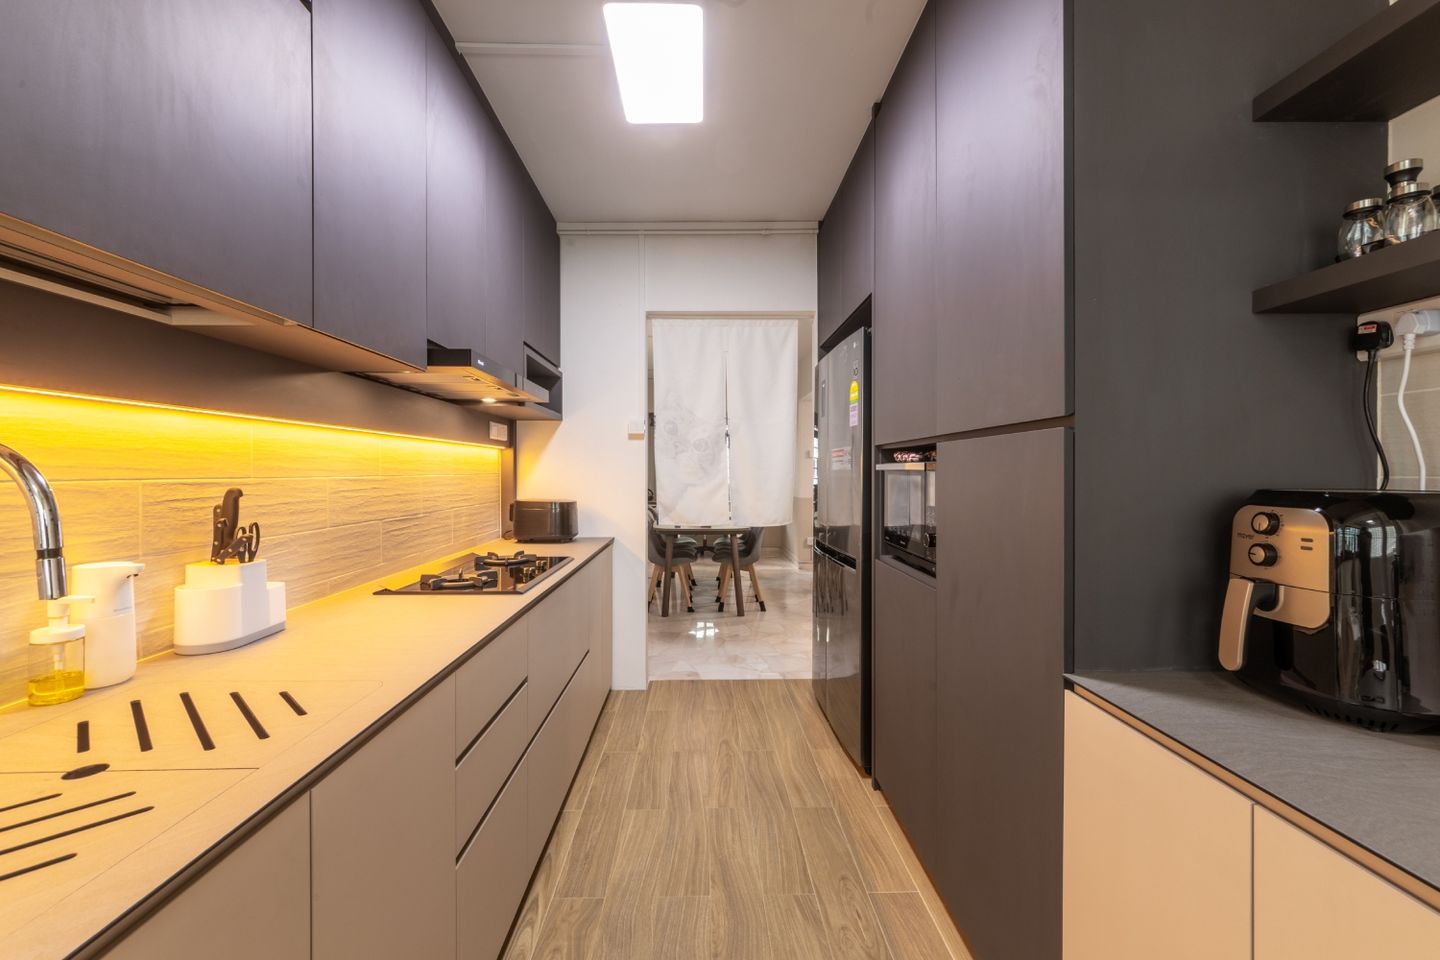 Rustic Kitchen Interior Design - Livspace